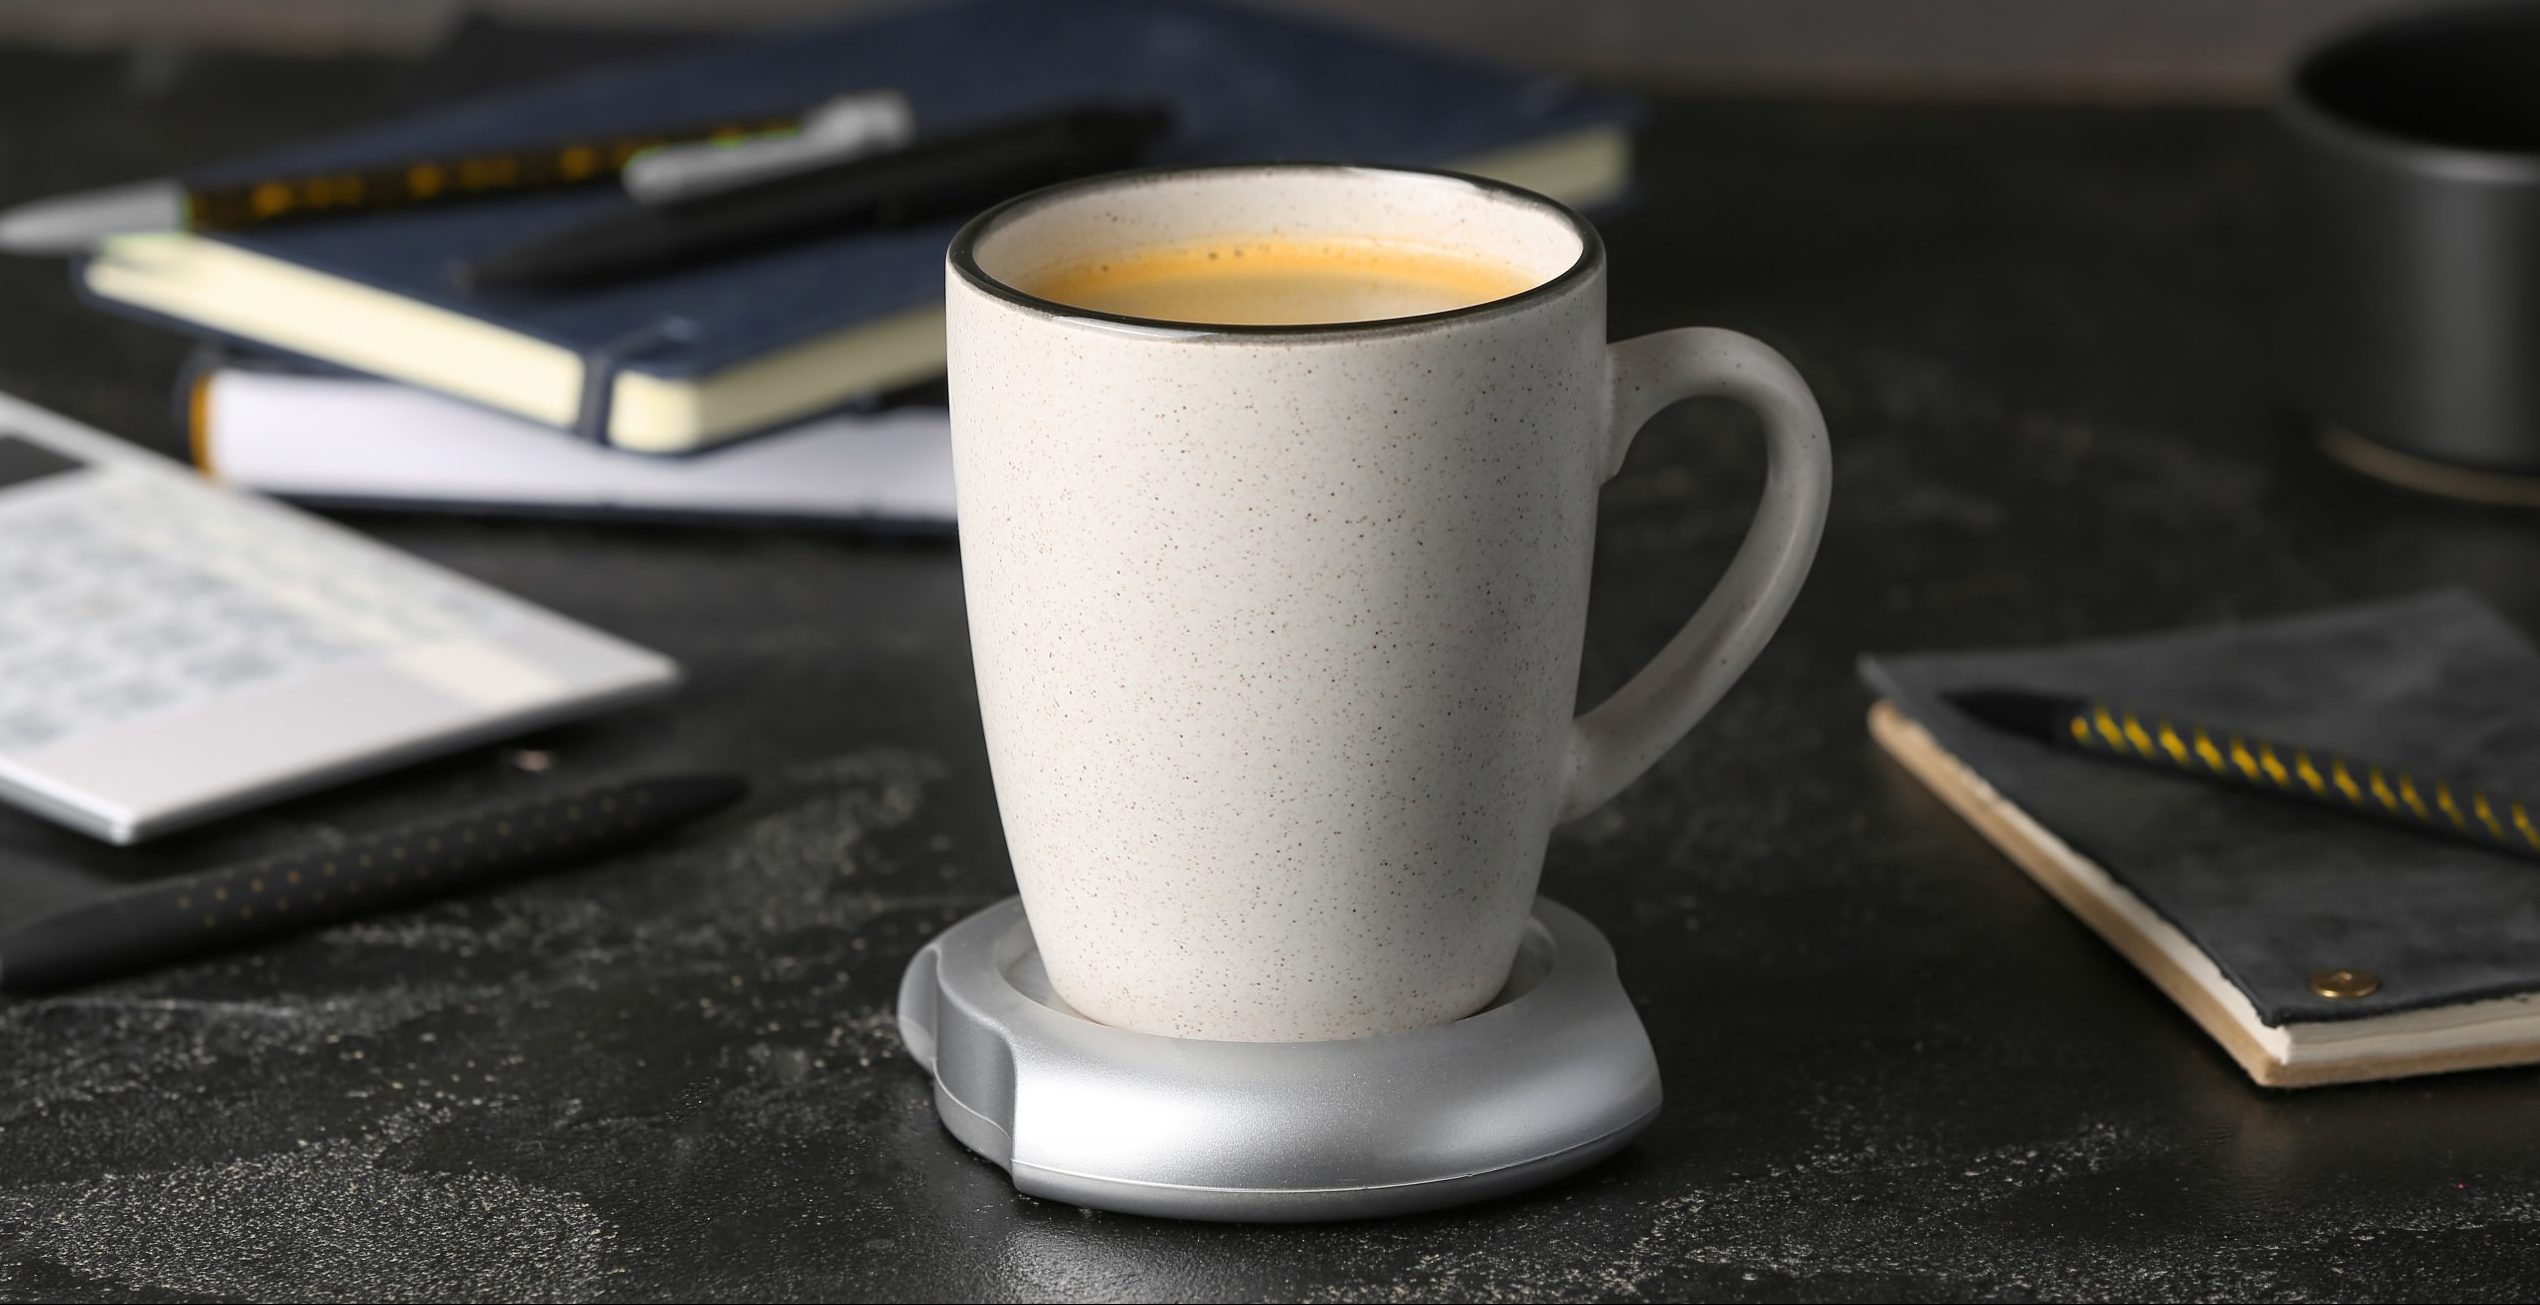 VOBAGA Coffee Mug Warmer has three temperature settings » Gadget Flow